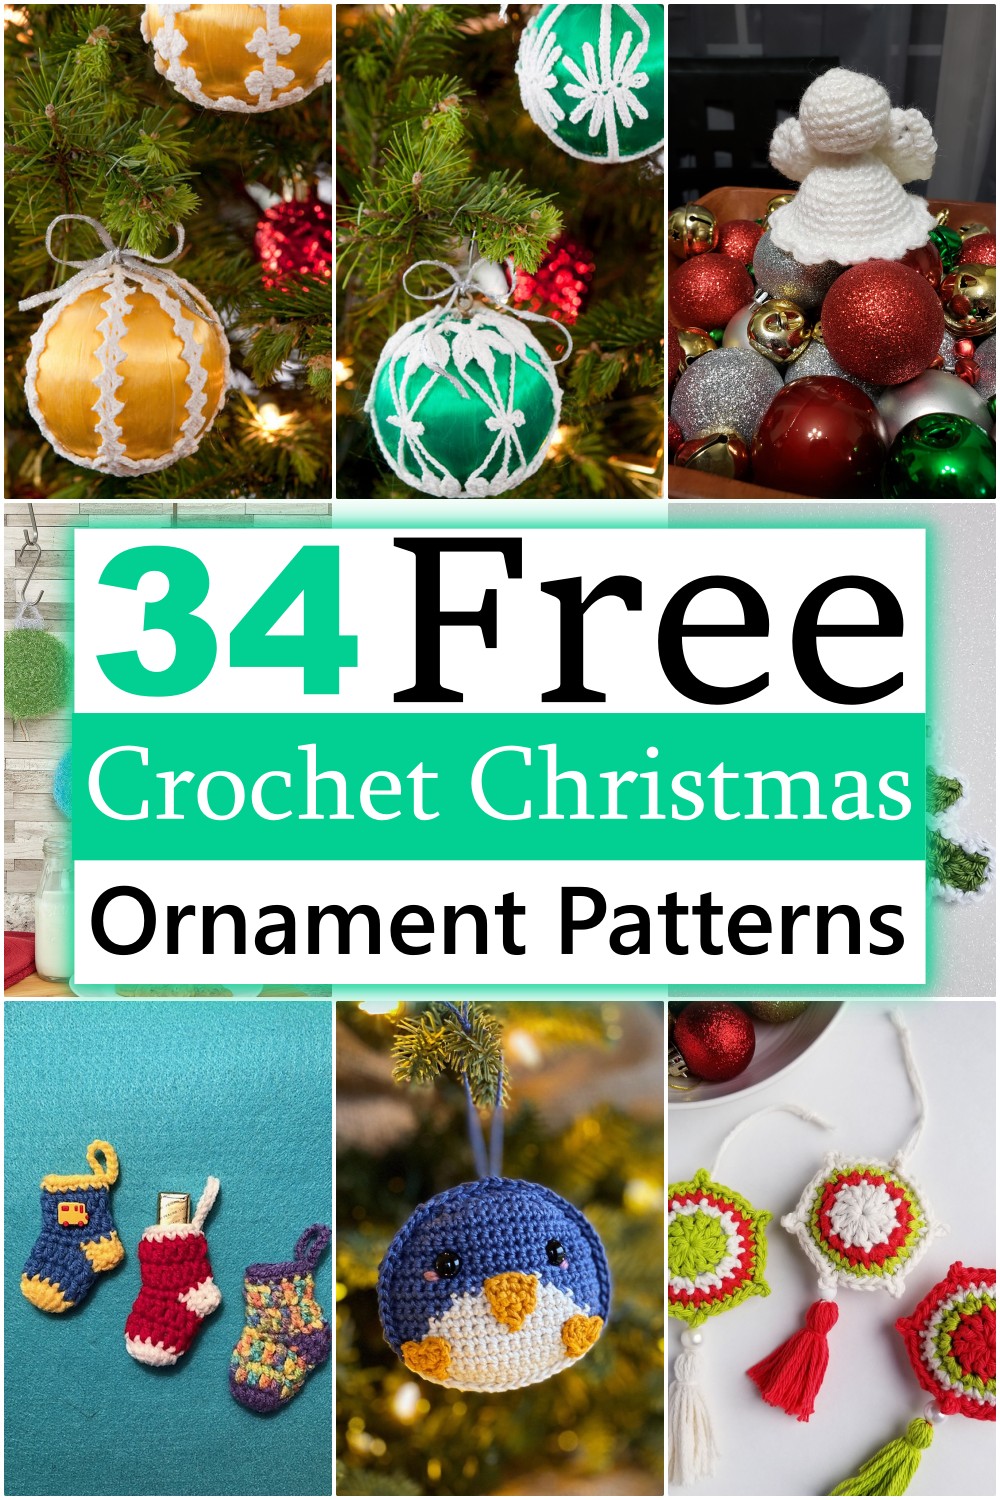 34 Free Crochet Christmas Ornament Patterns